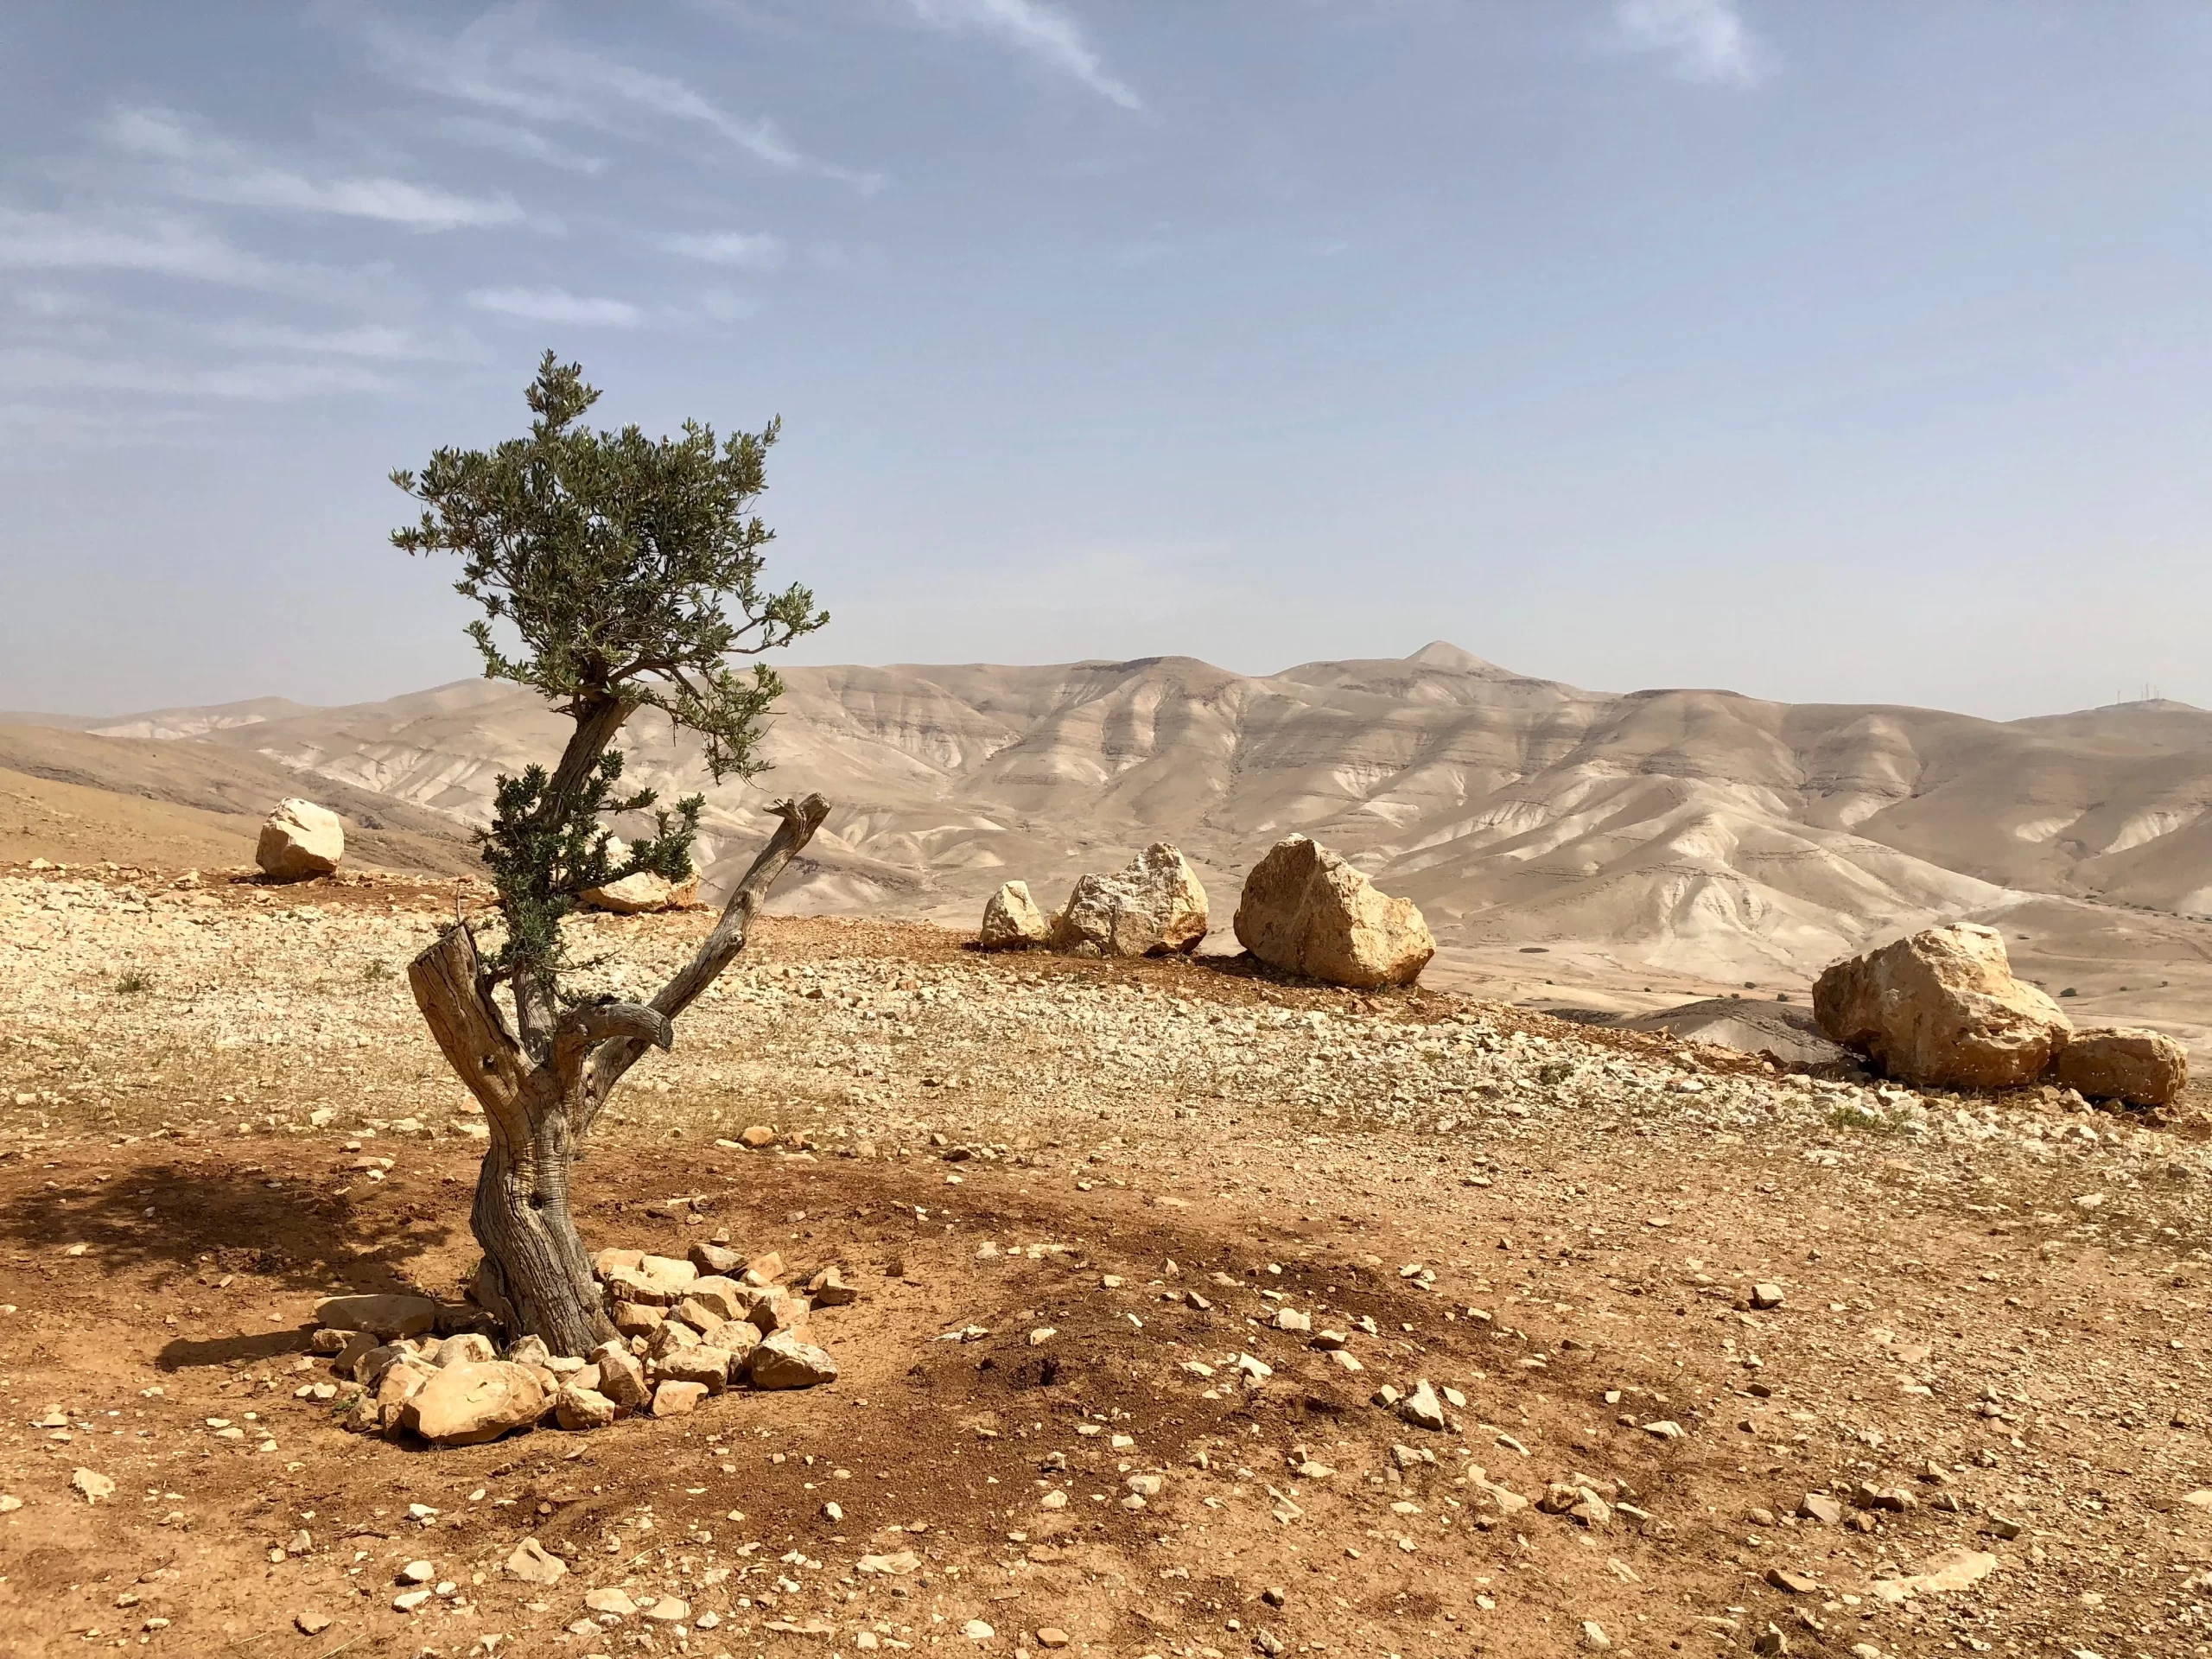 david-mclenachan-The hills above Jericho on the West Bank-unsplash